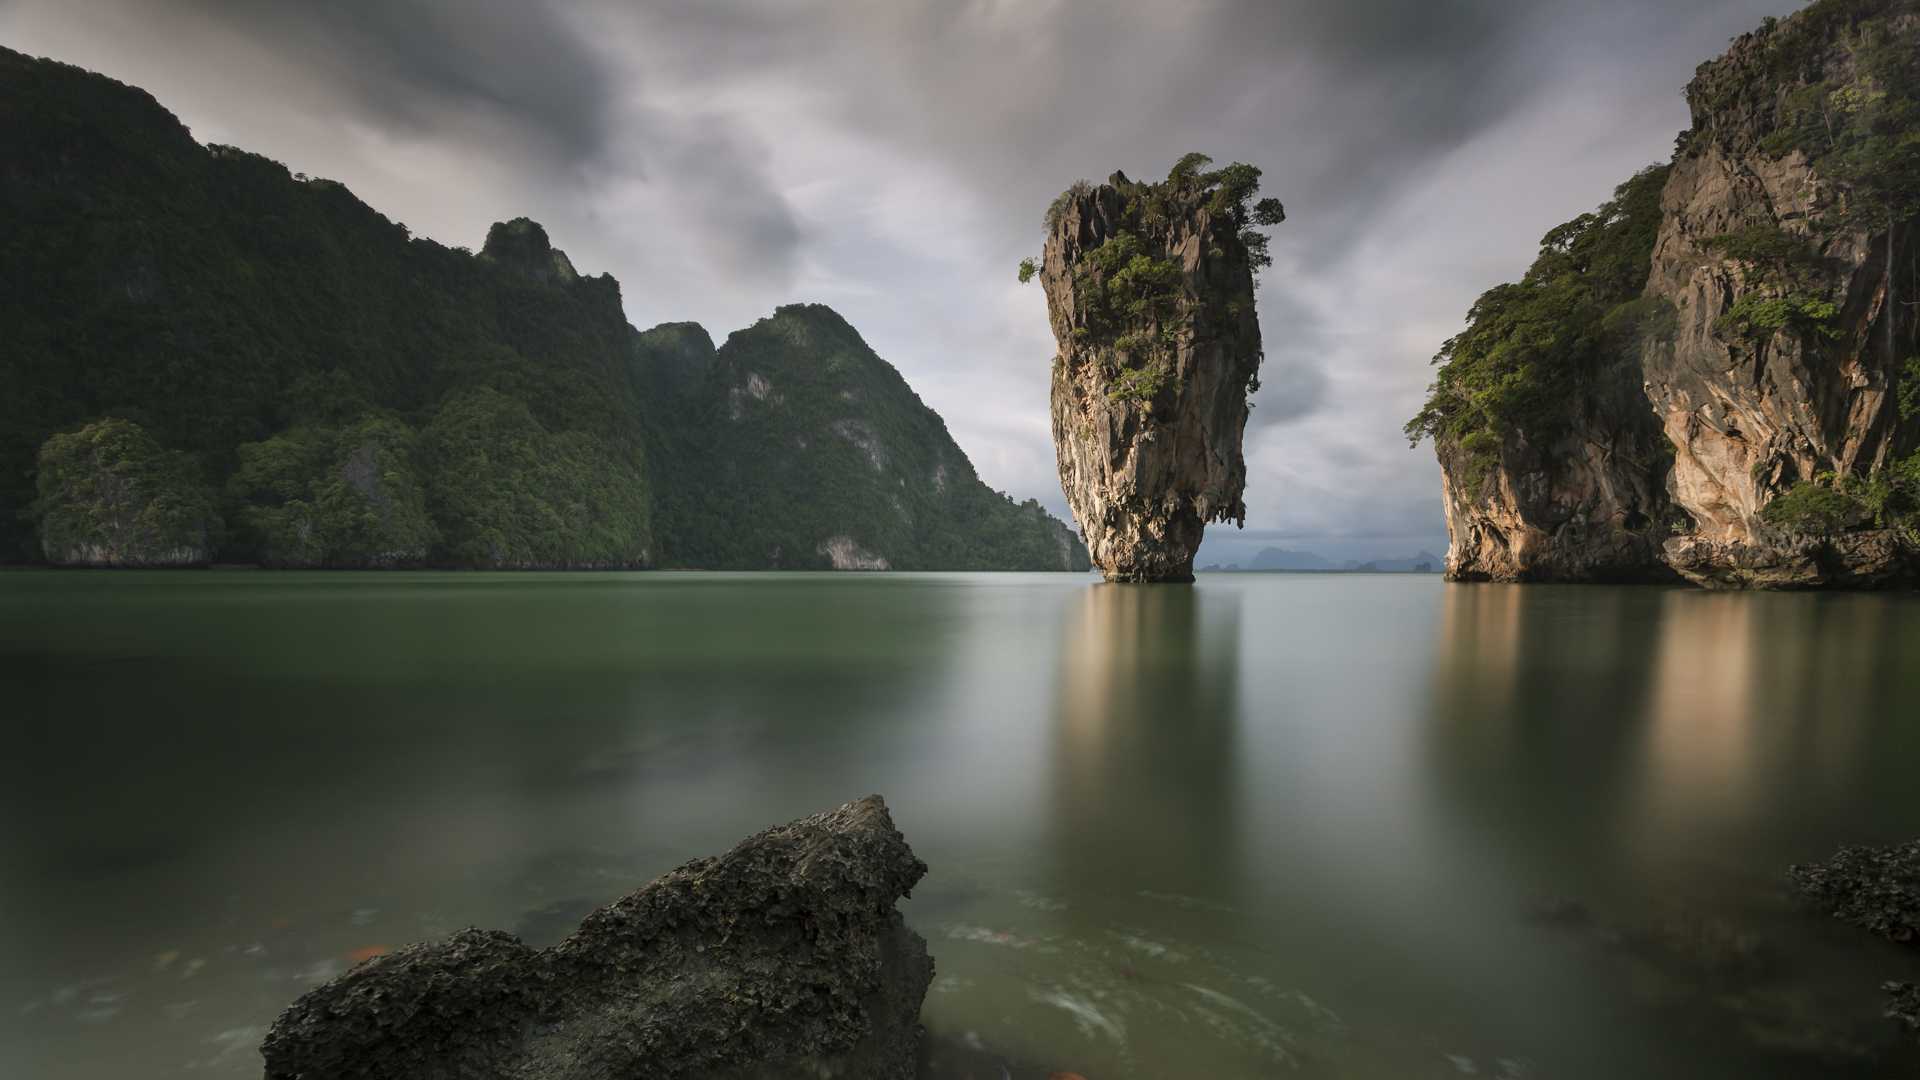 James bond island in Phang Nga bay Thailand Windows 10